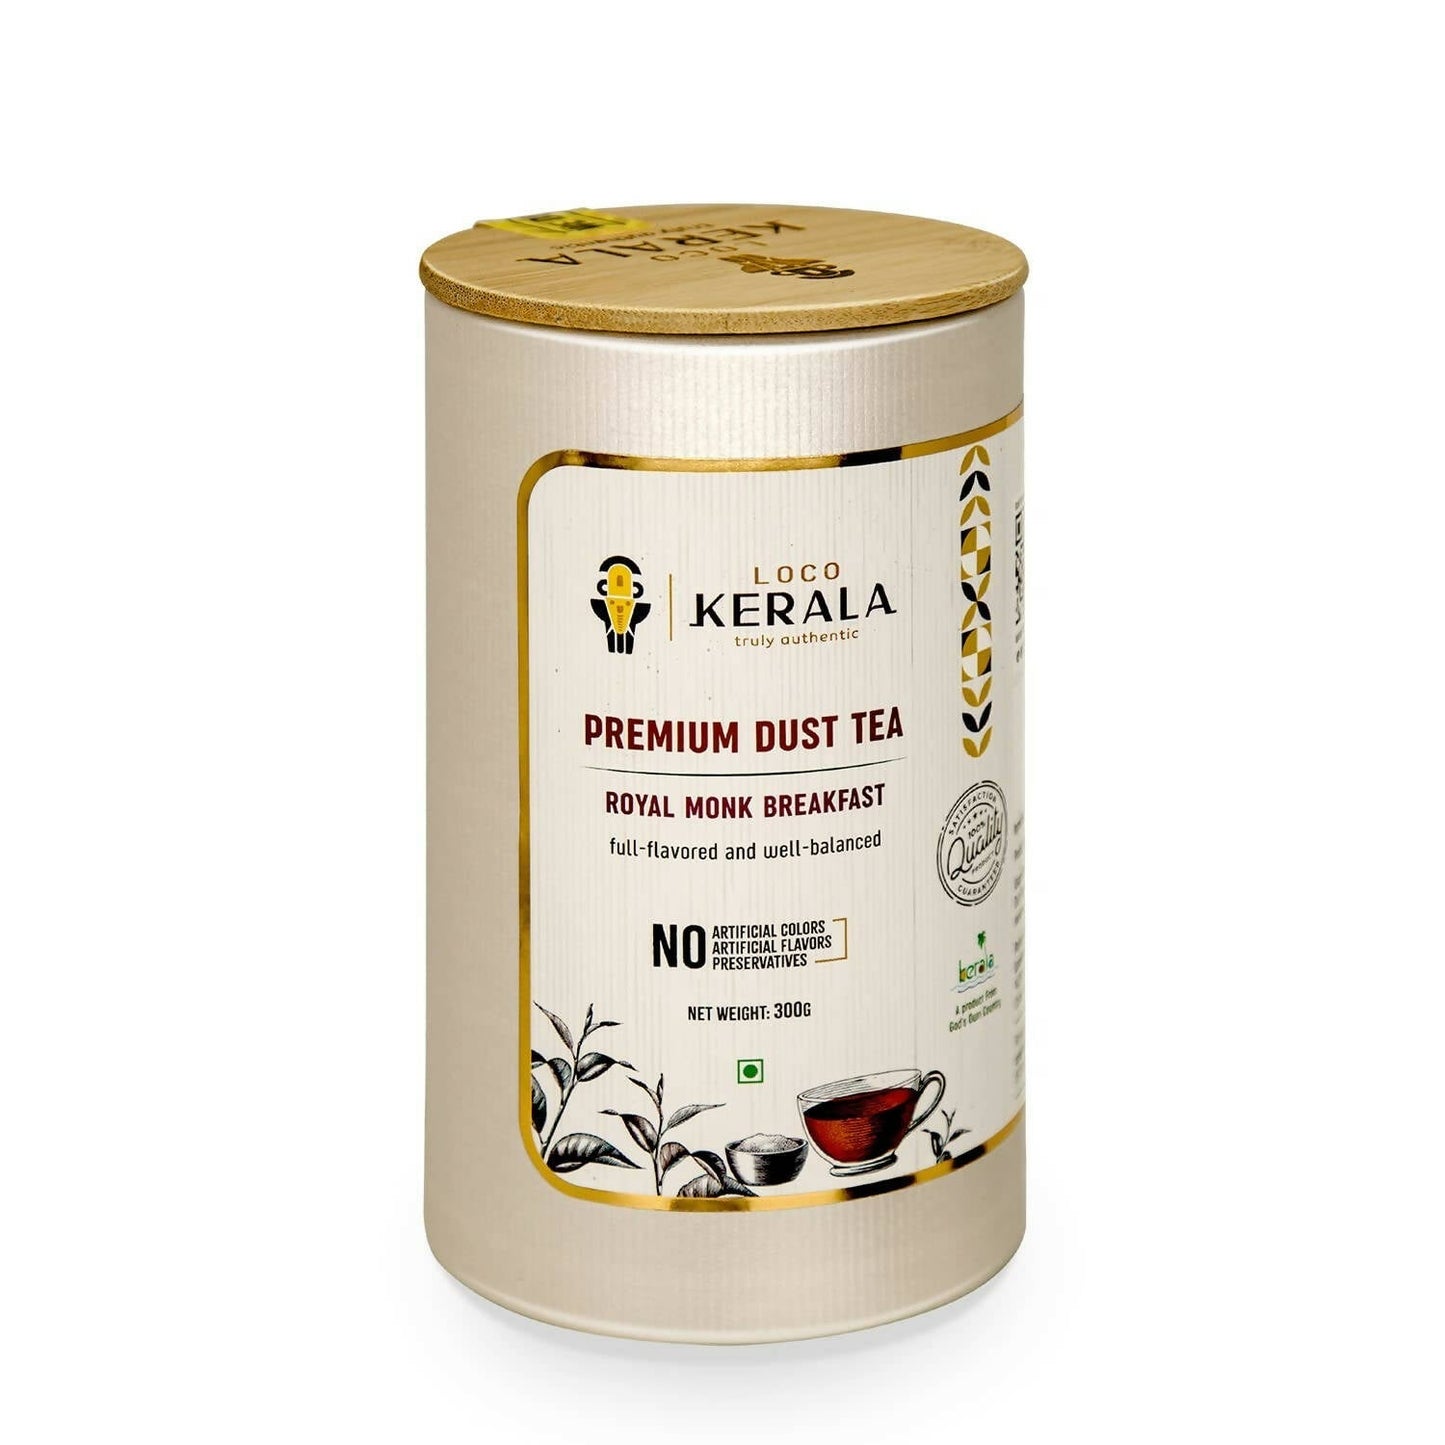 LocoKerala Royal Monk Breakfast Premium Dust Tea